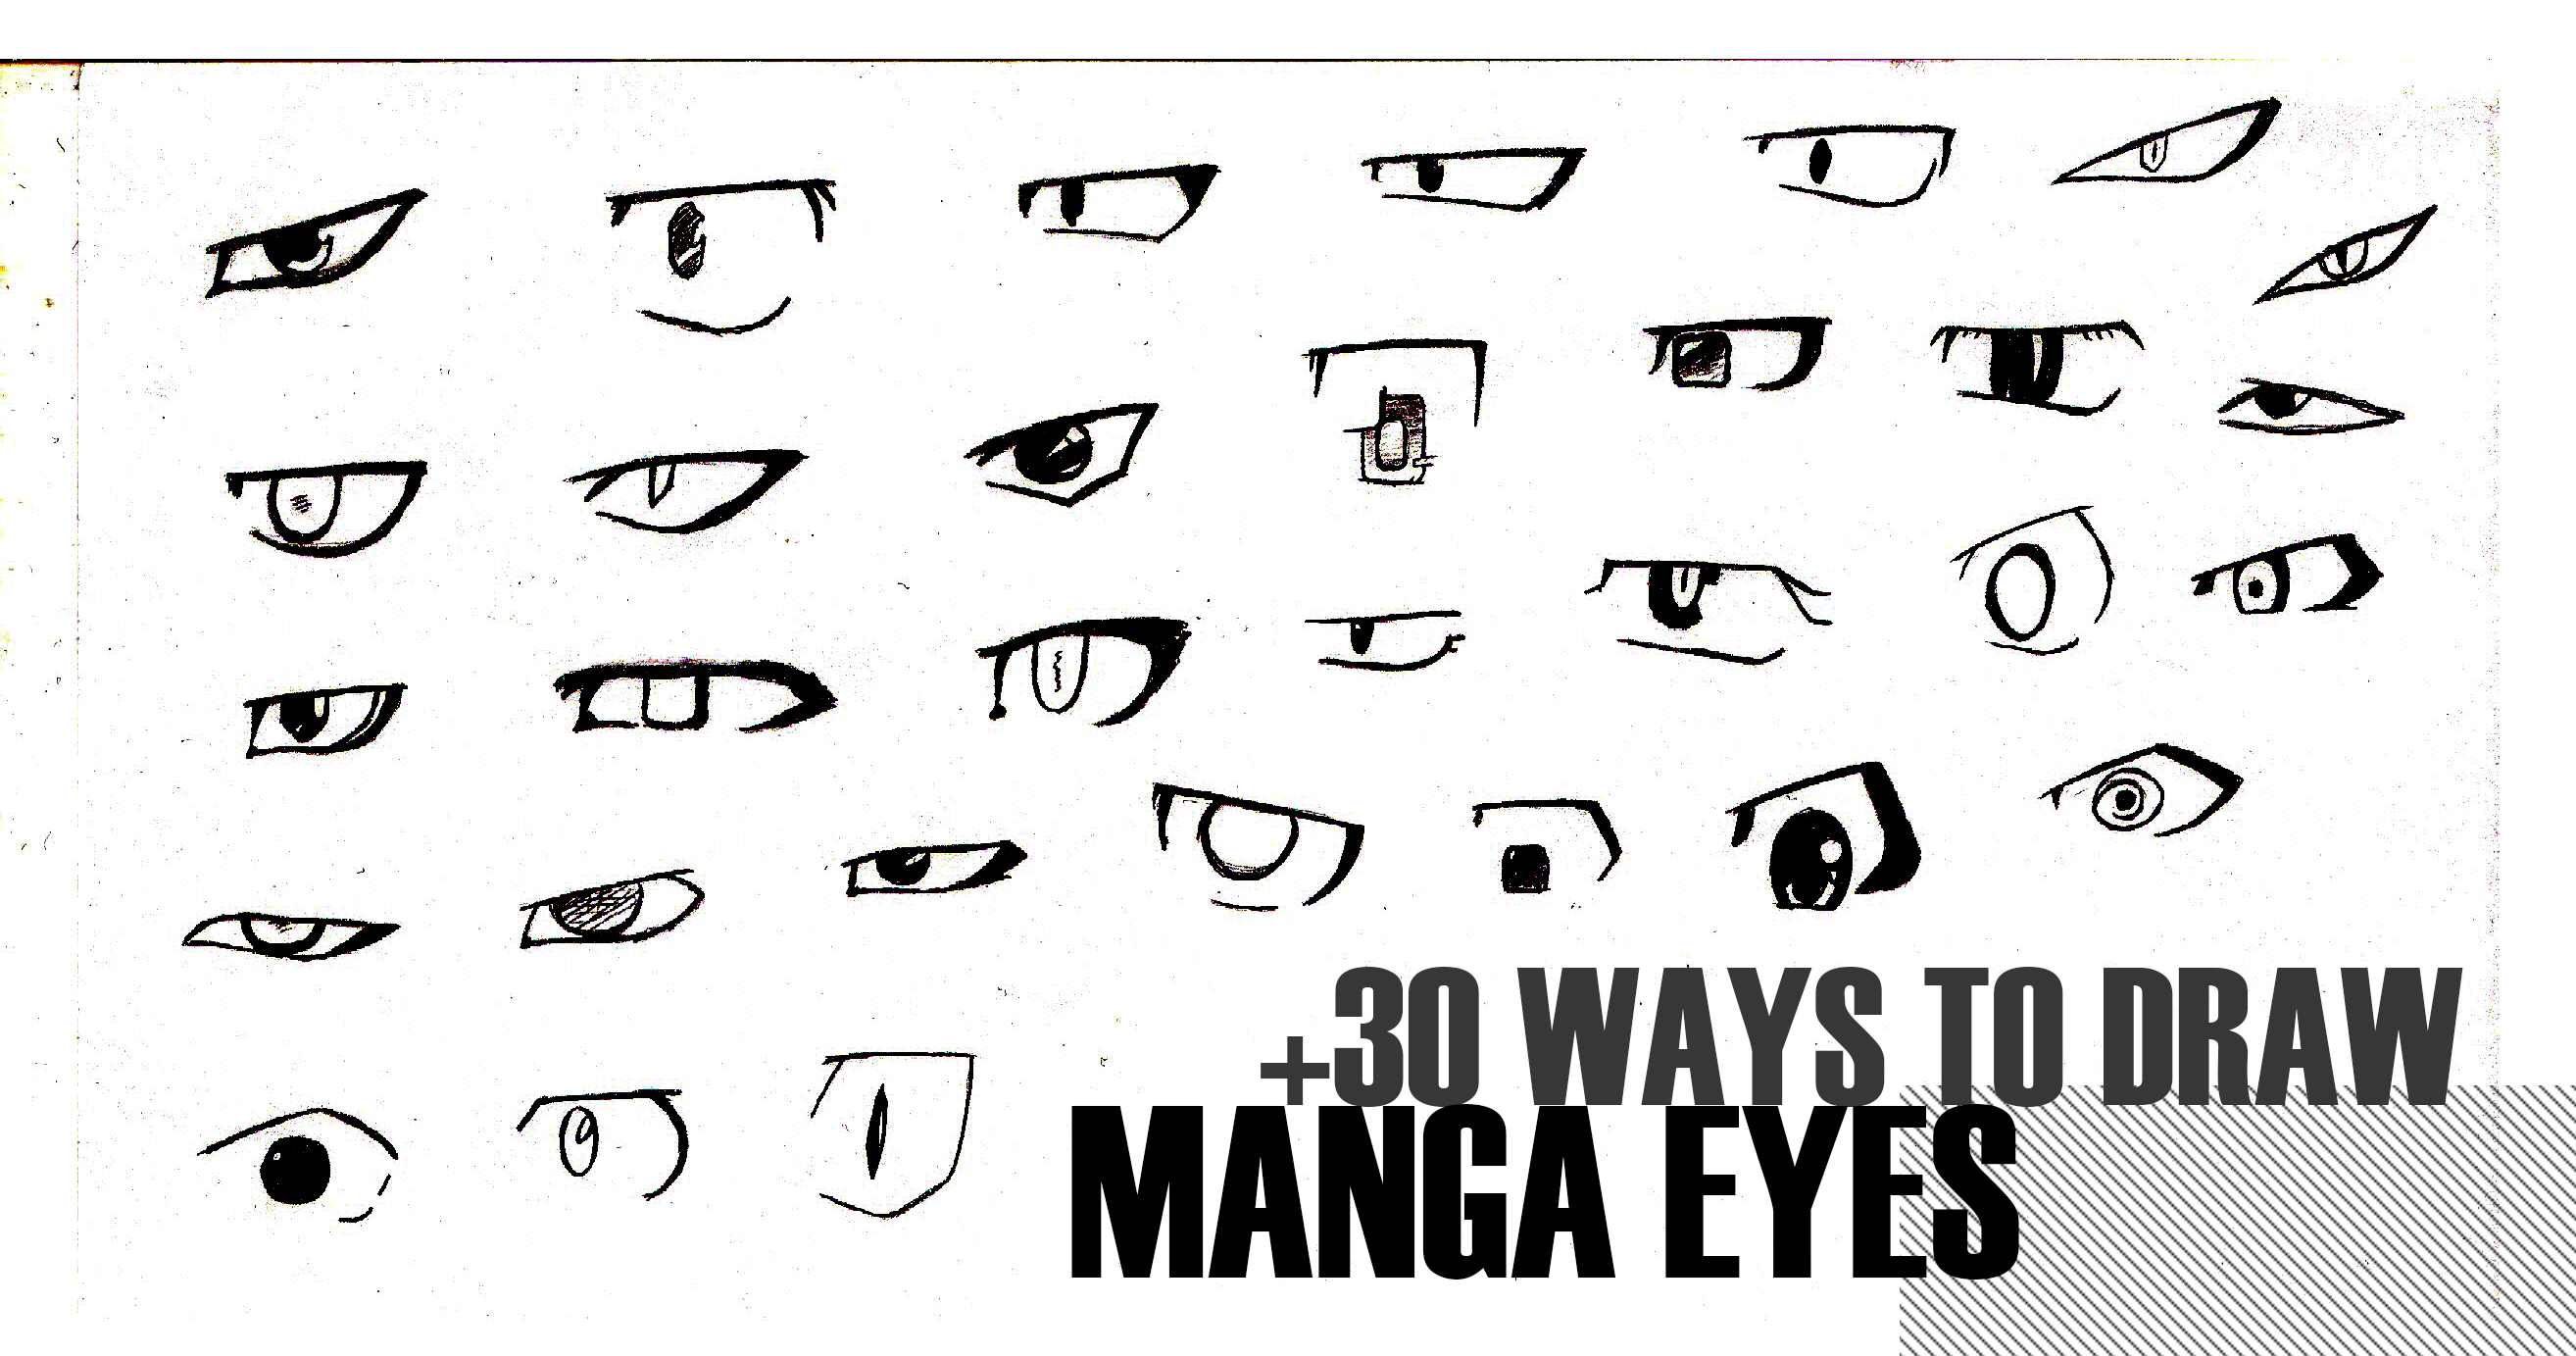 +30 Ways to Draw Manga Eyes by MangakaOfficial on DeviantArt